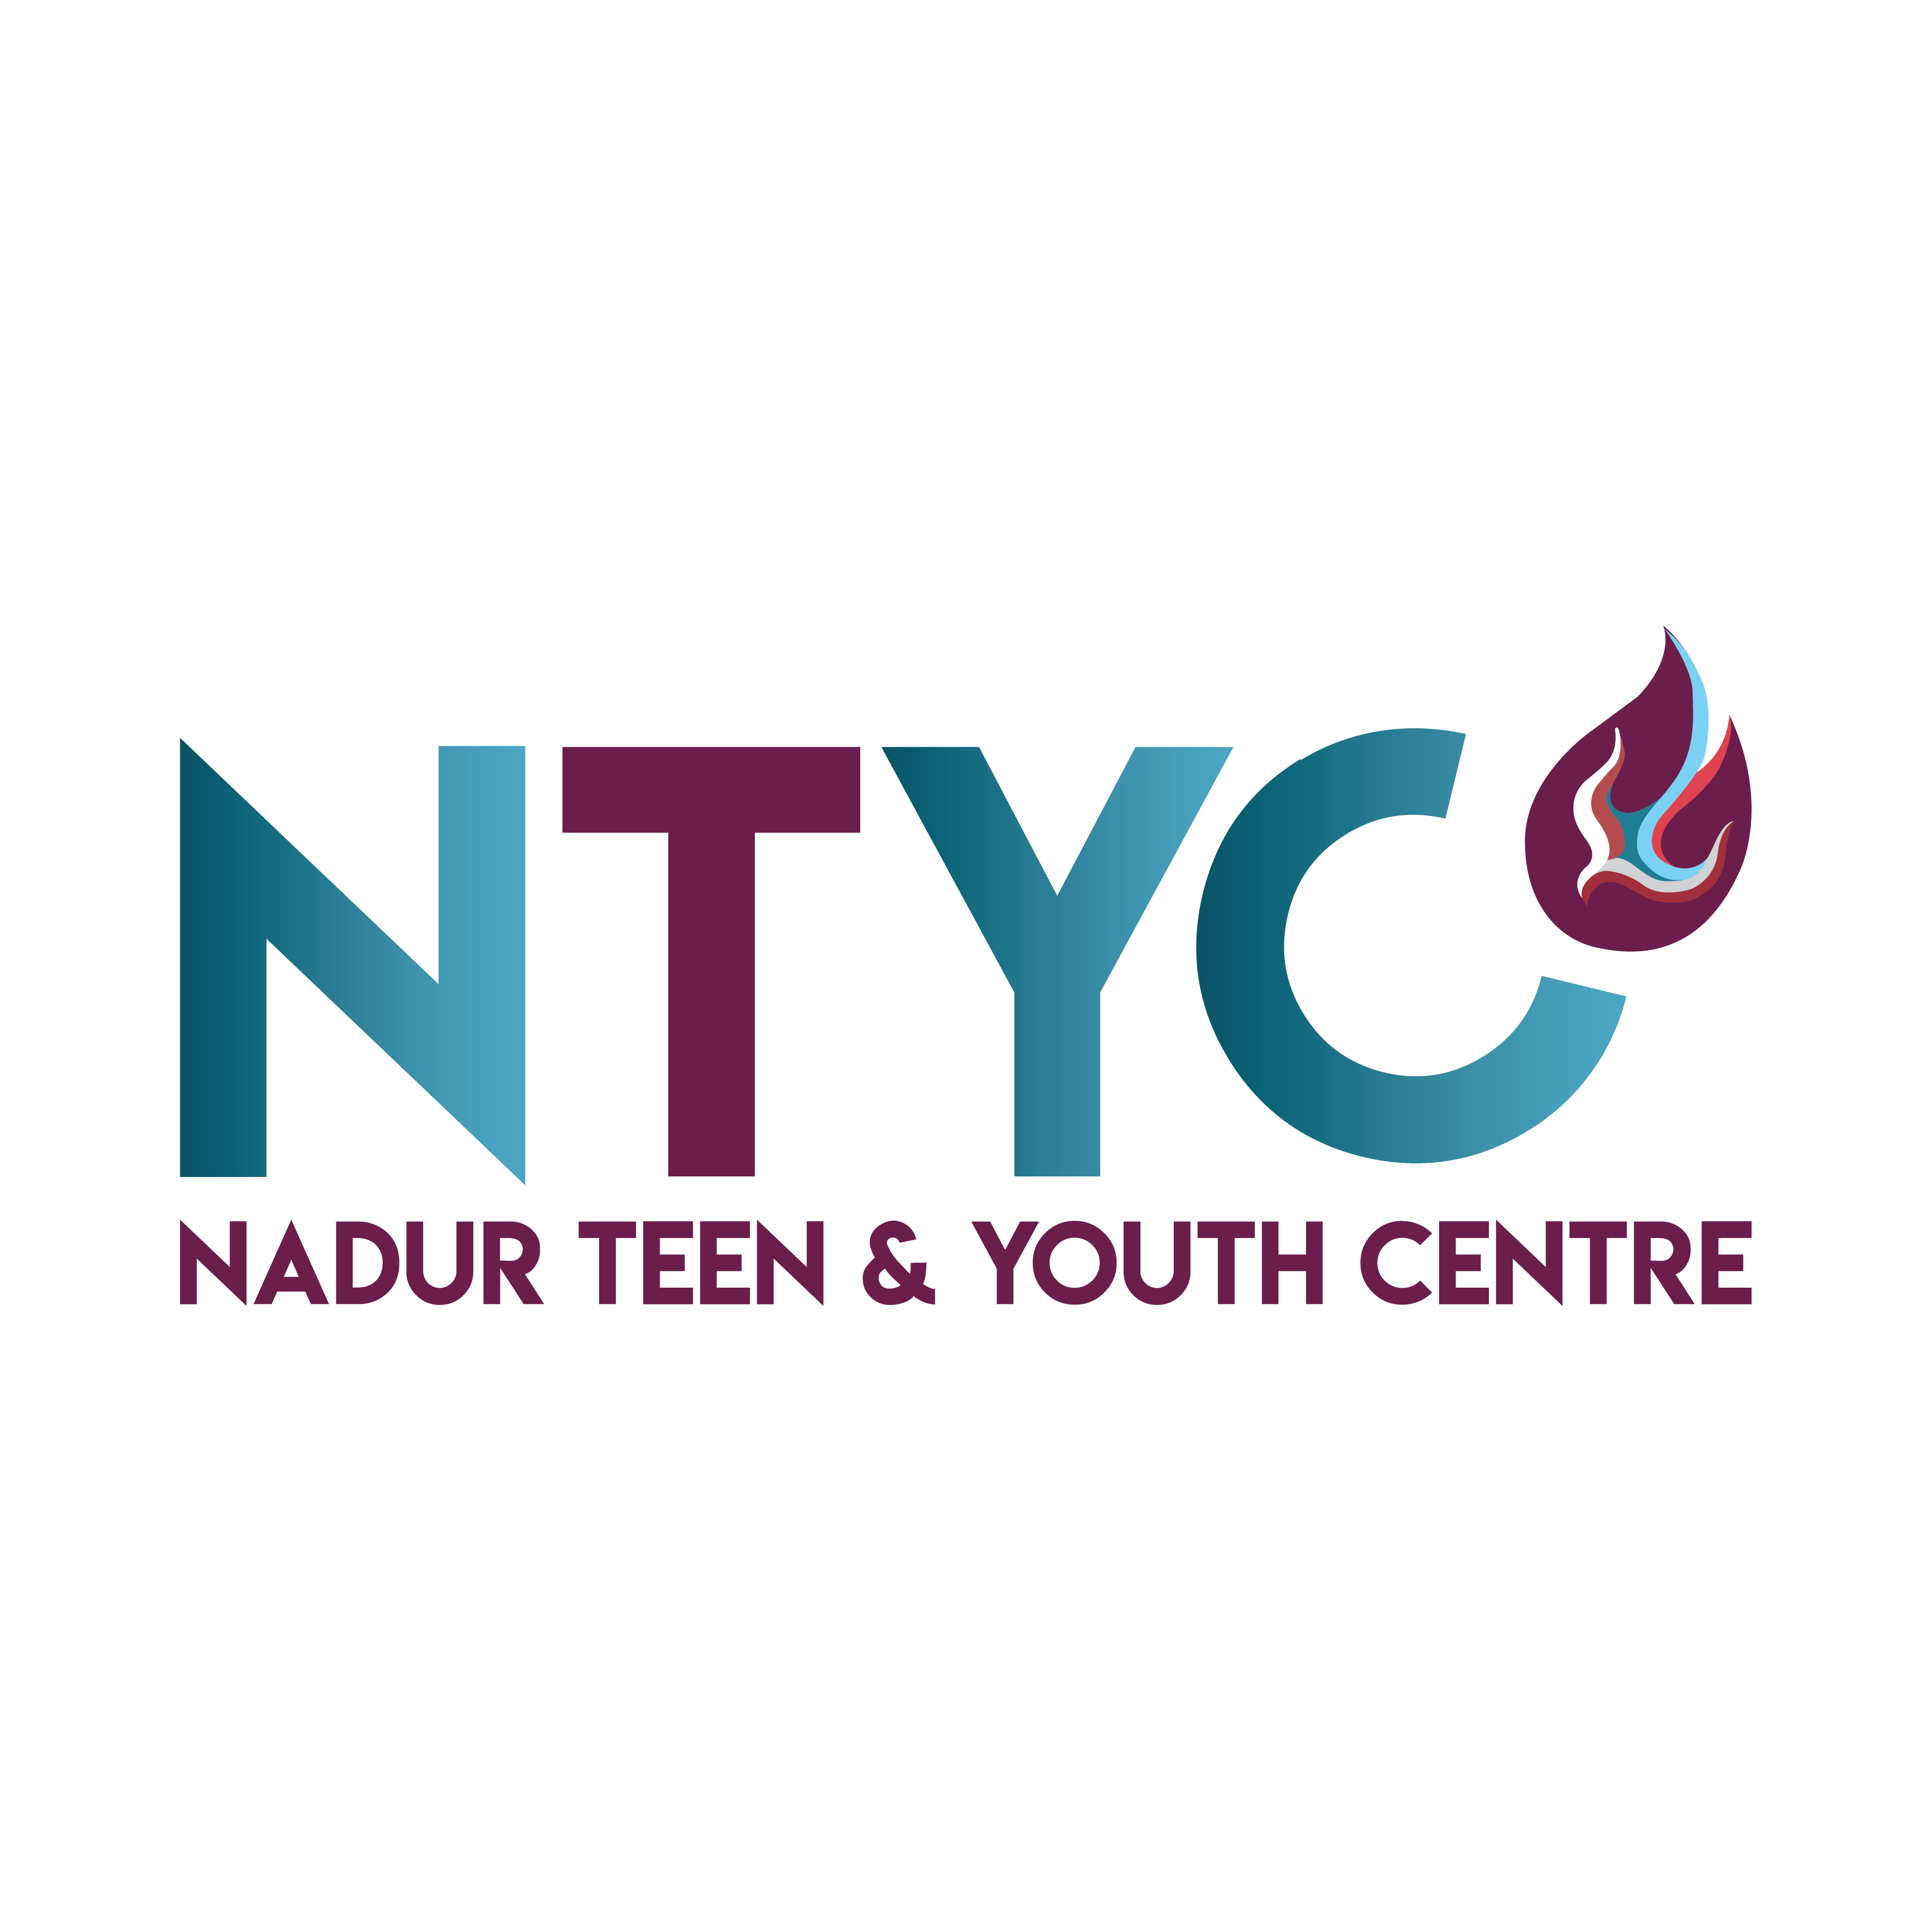 Nadur Teen & Youth Centre